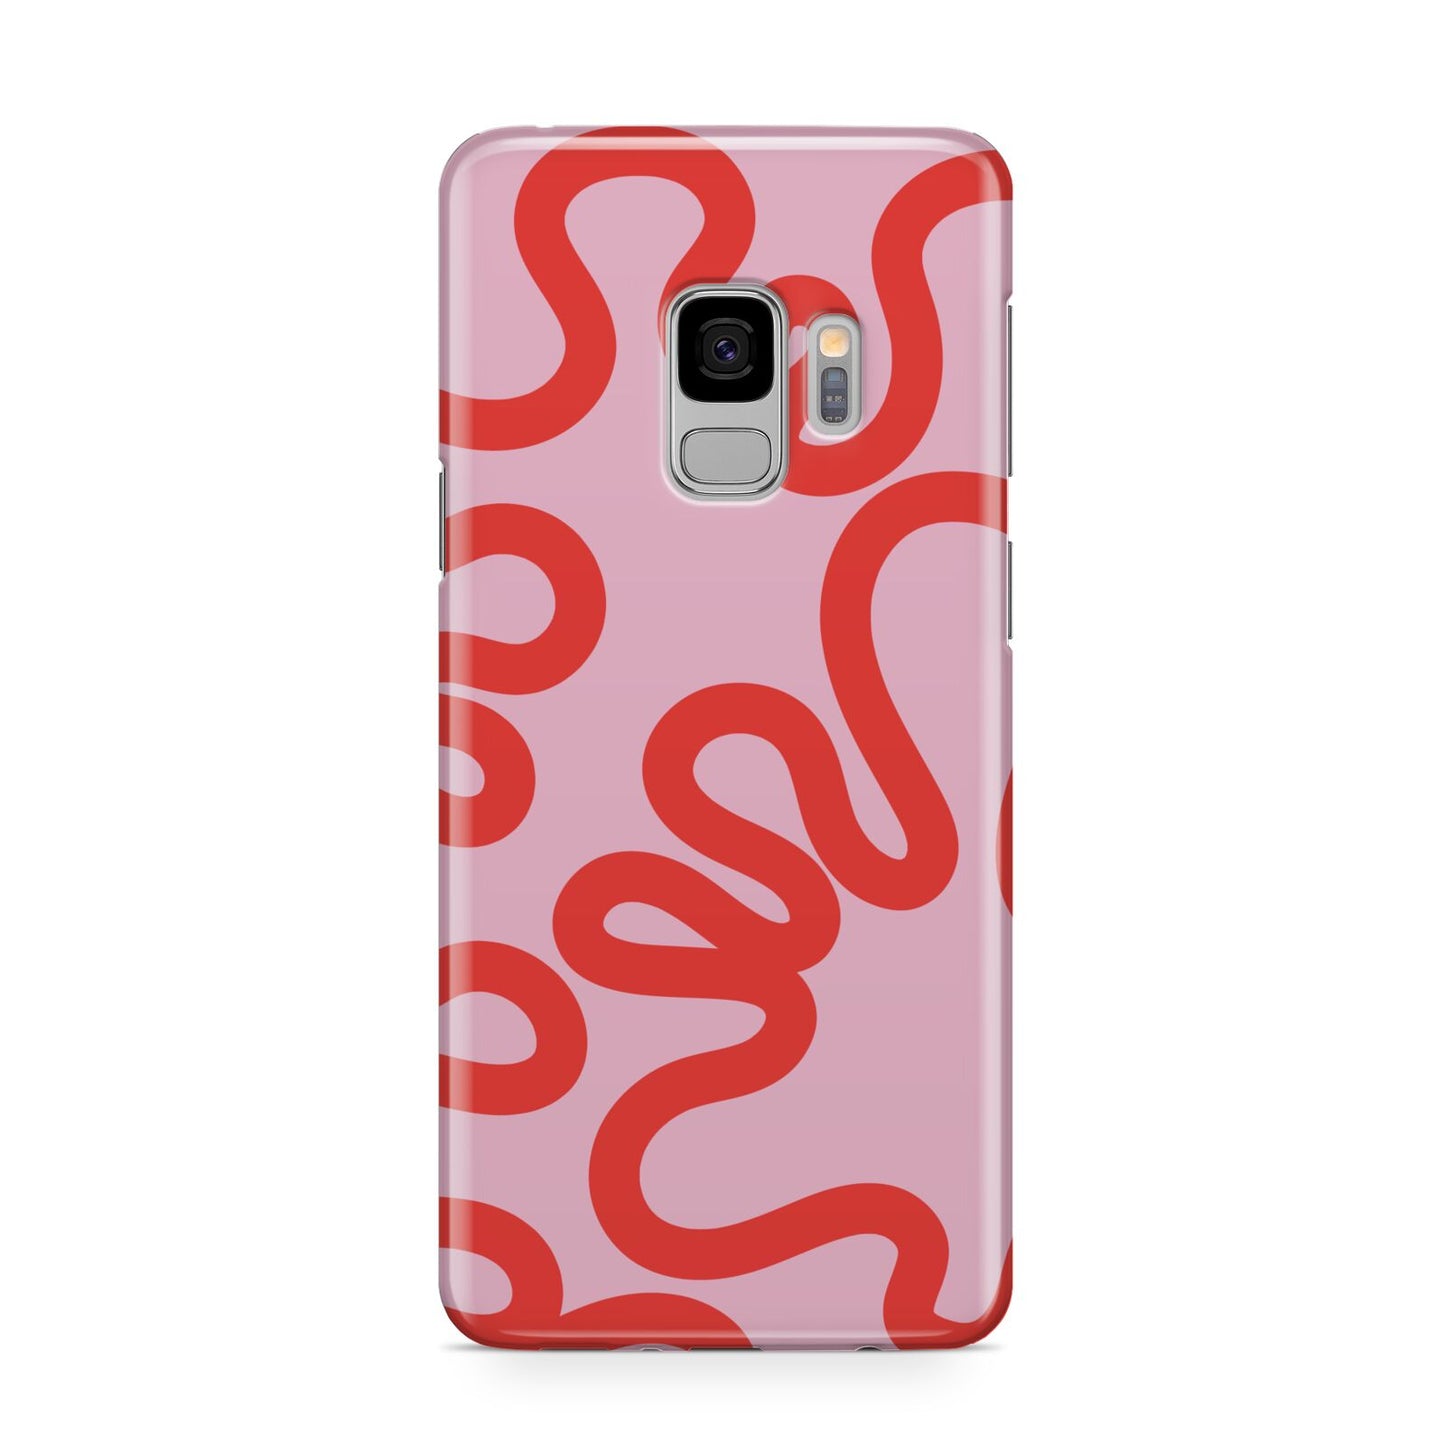 Squiggle Samsung Galaxy S9 Case